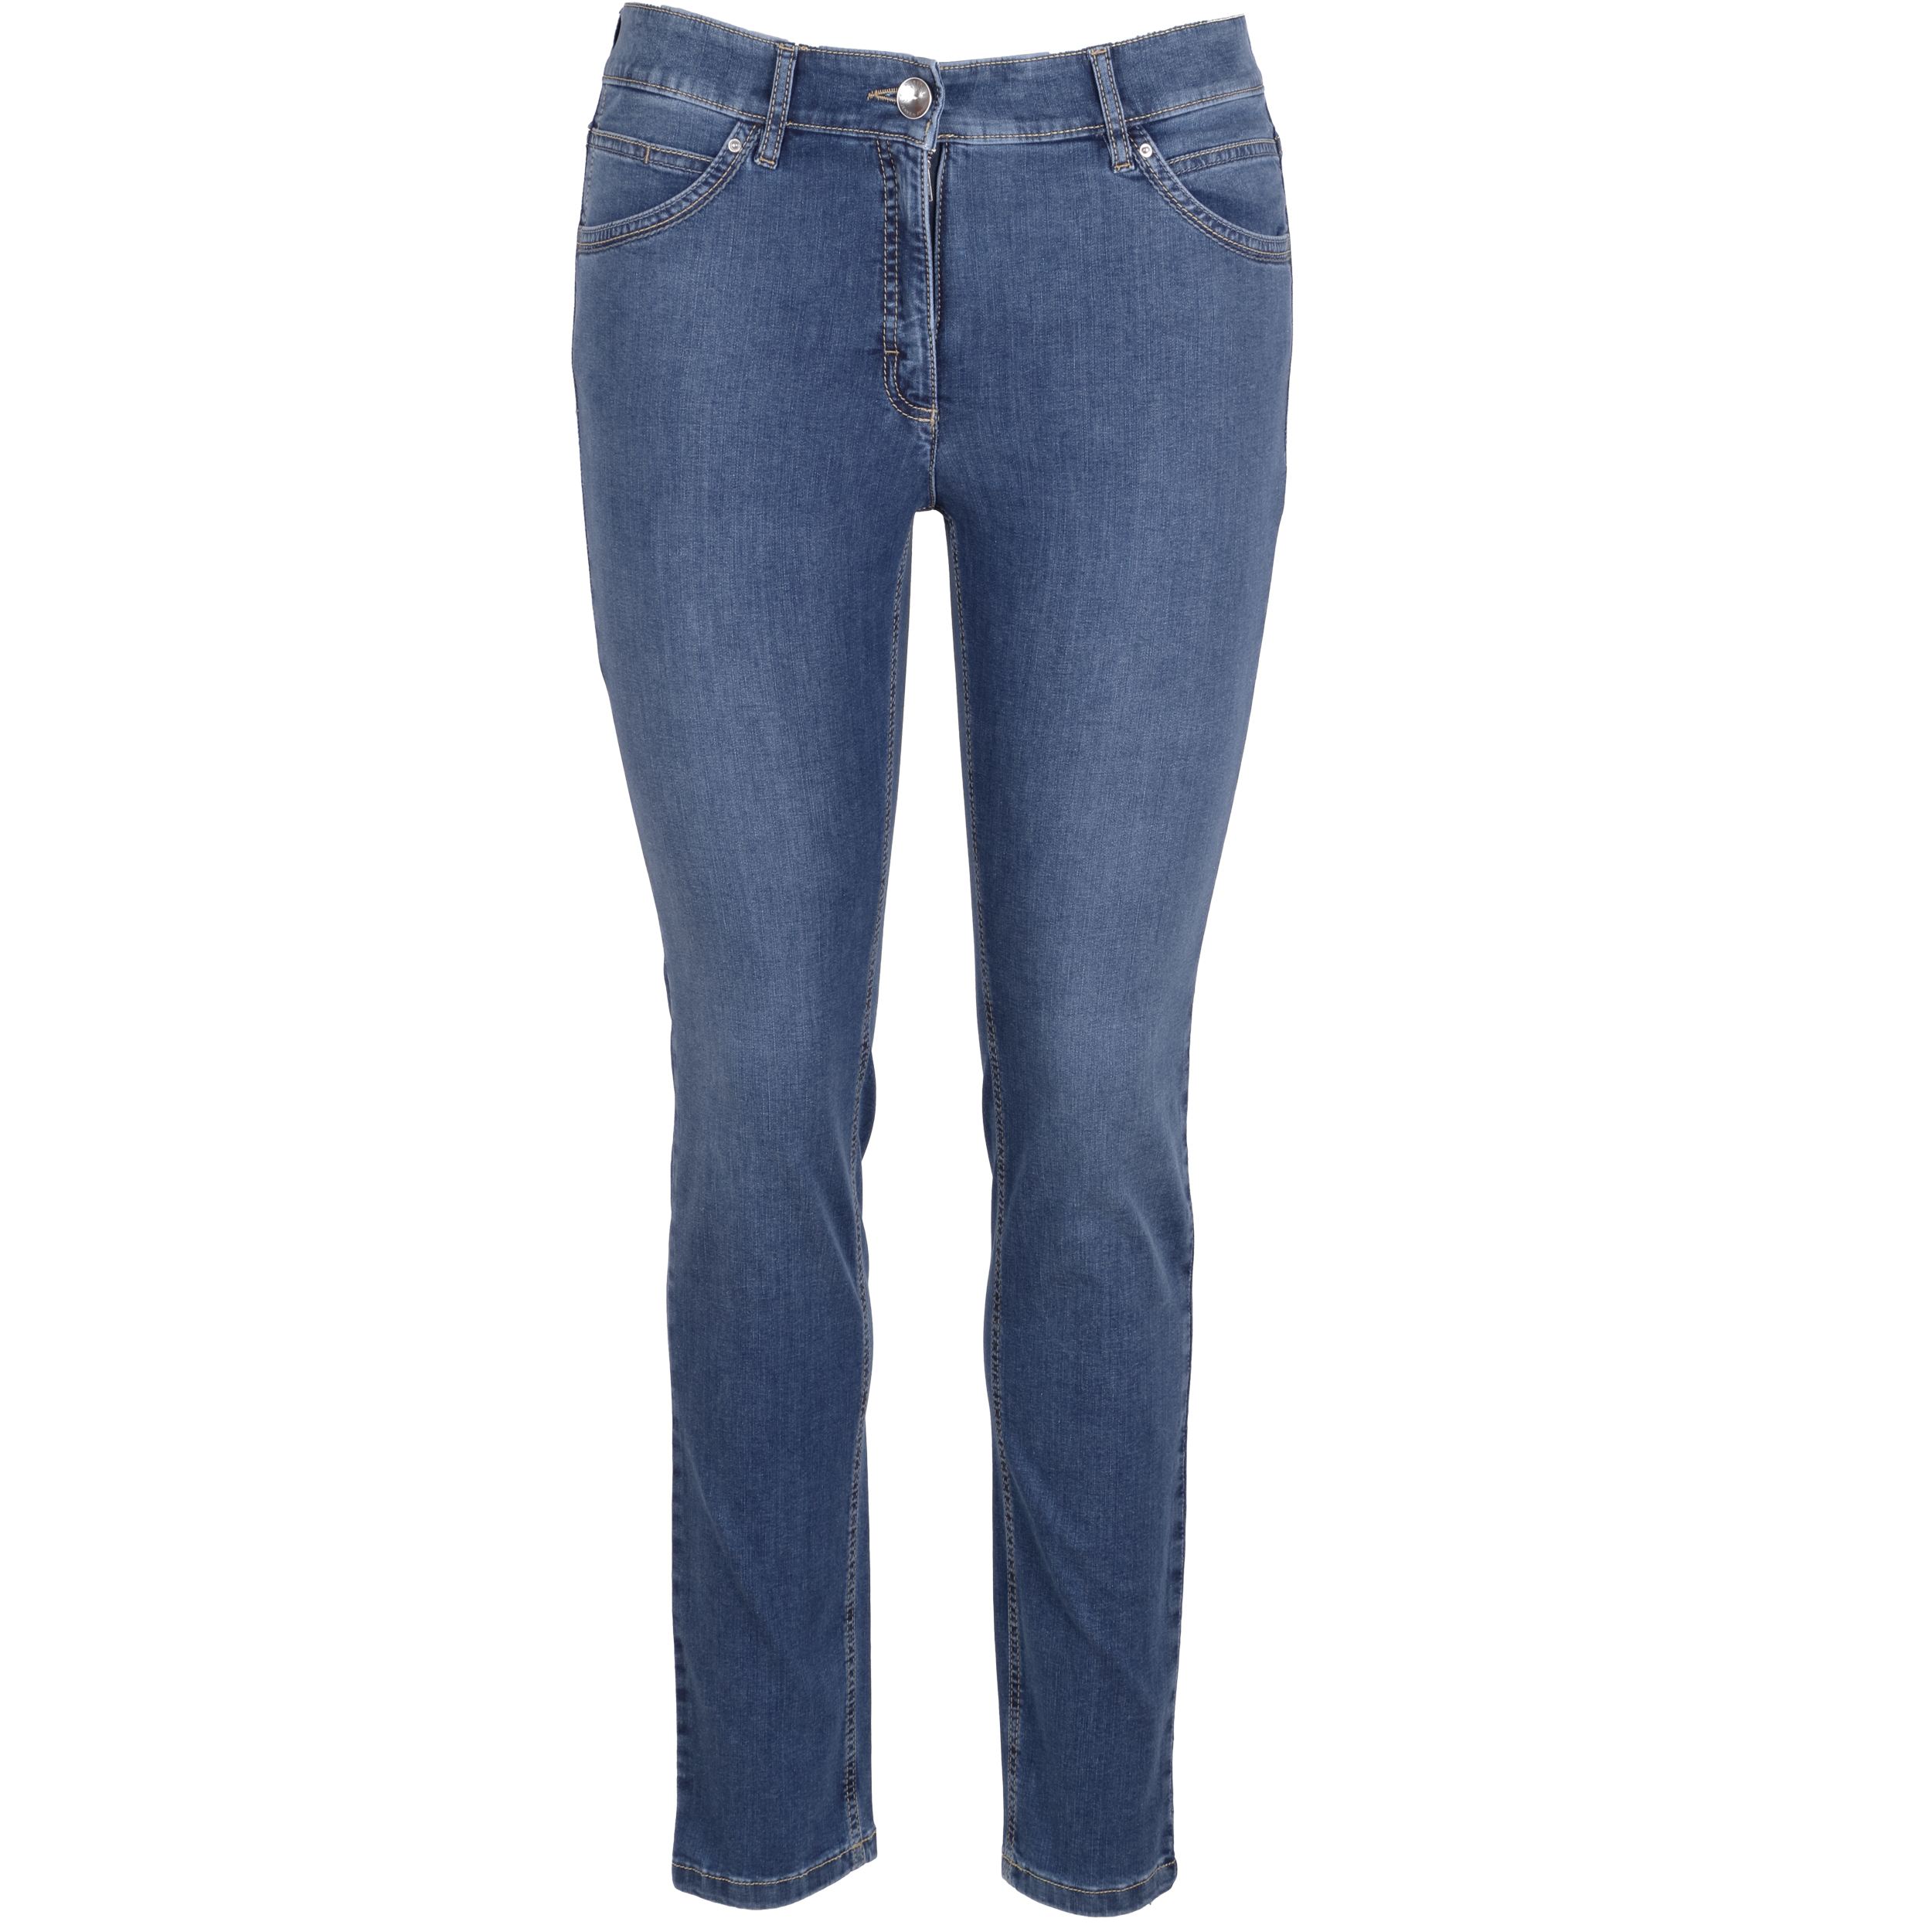 Zerres Damen Jeans Twigy Sensational  36 blau